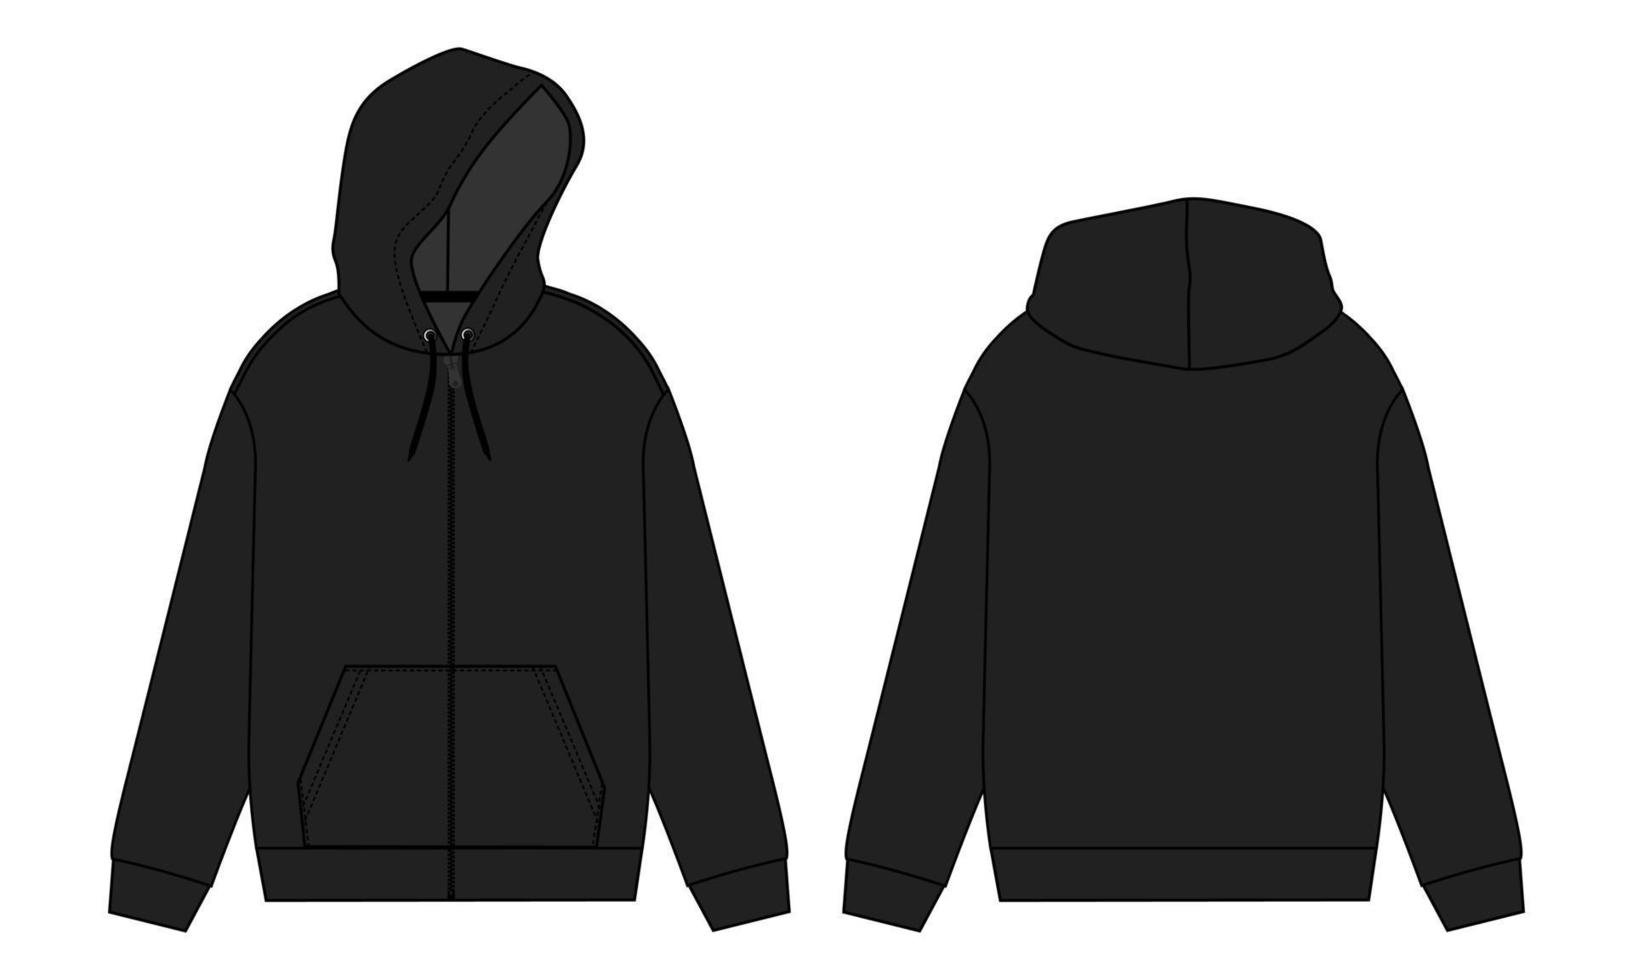 manga larga con capucha moda técnica boceto plano ilustración vectorial plantilla de color negro vector